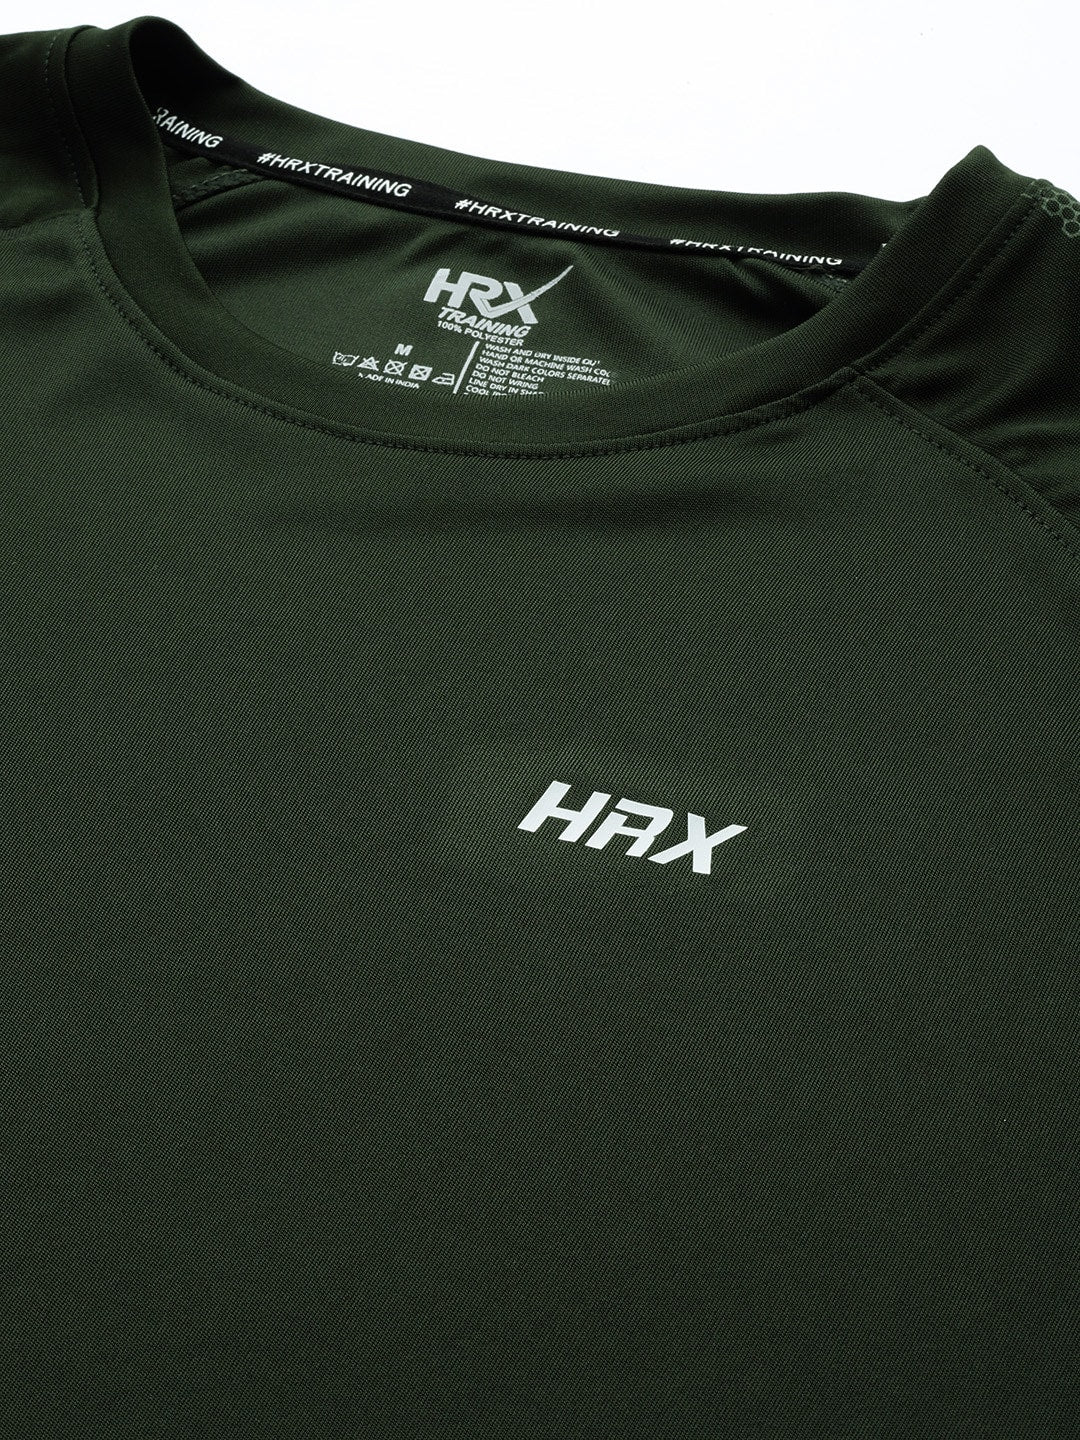 HRX Forays into Offline Space - Indian Retailer